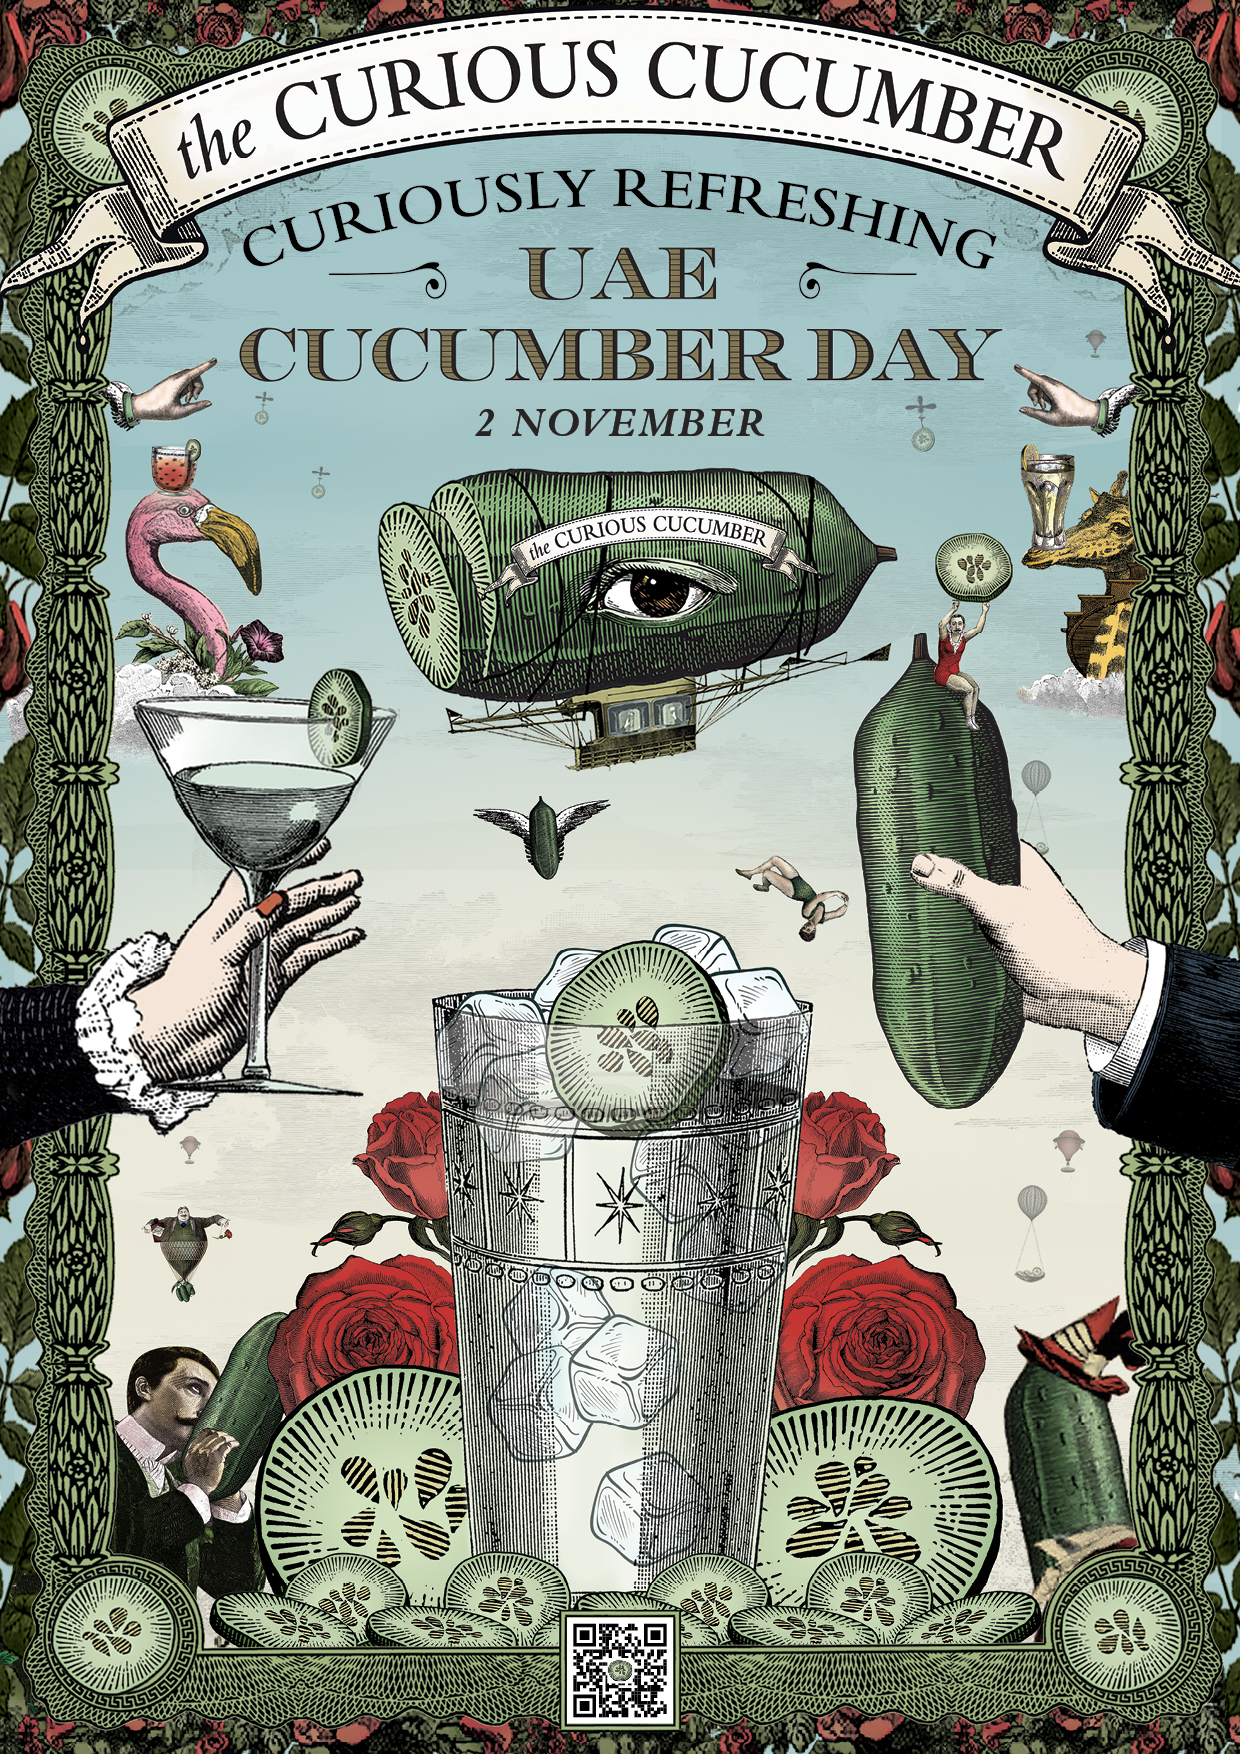 UAE Cucumber Day